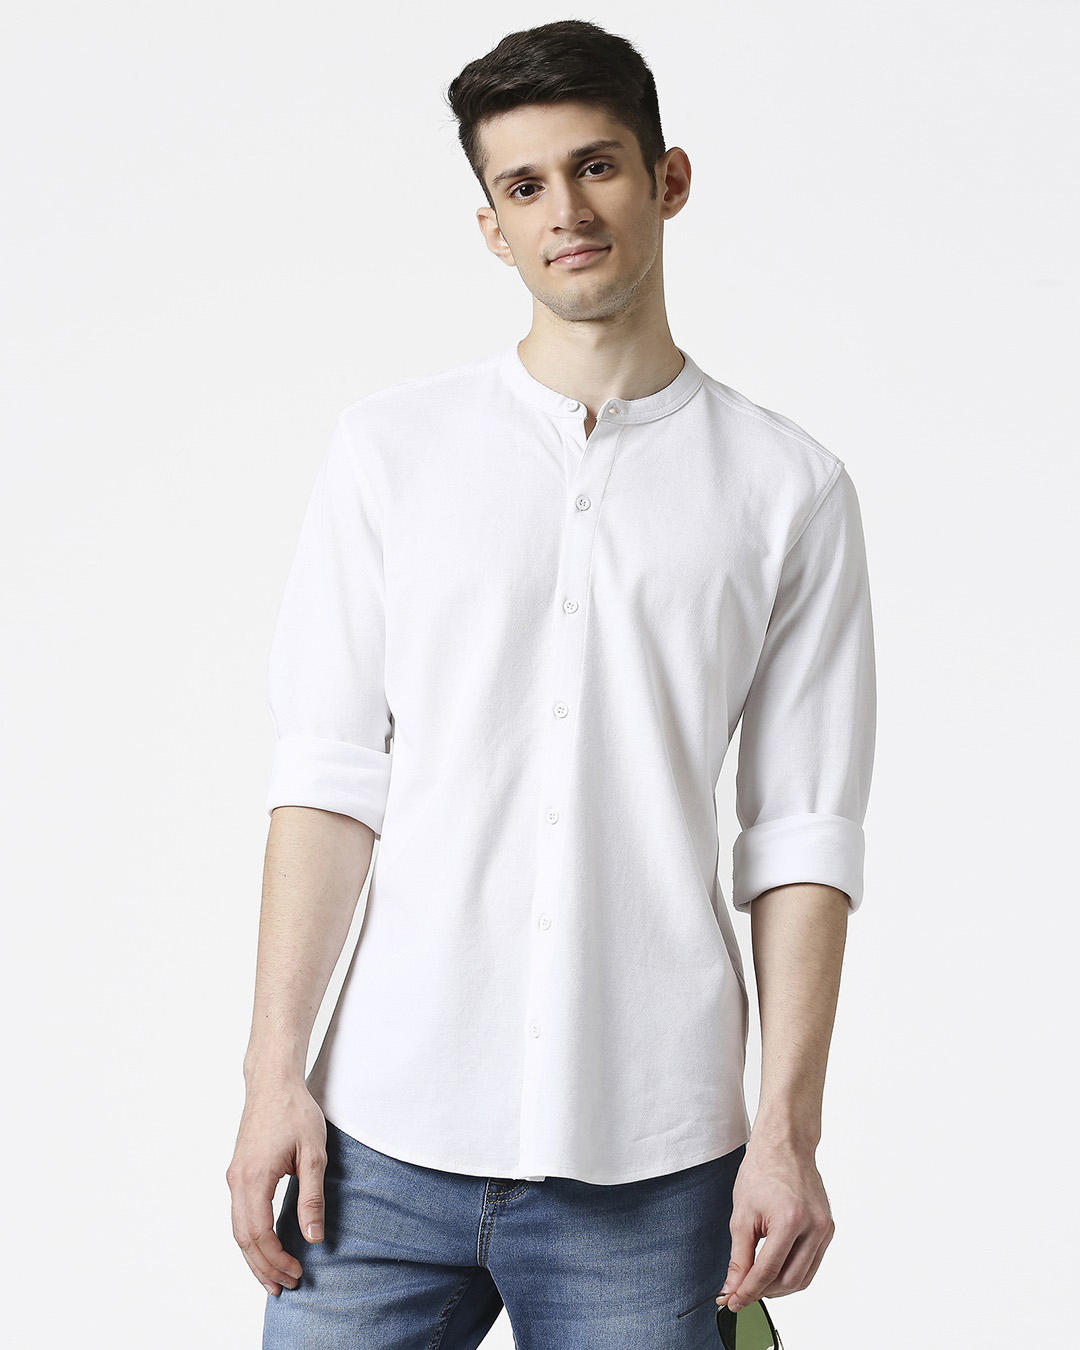 Buy Comfort Stretch Pique Knit White Shirt Online at Bewakoof